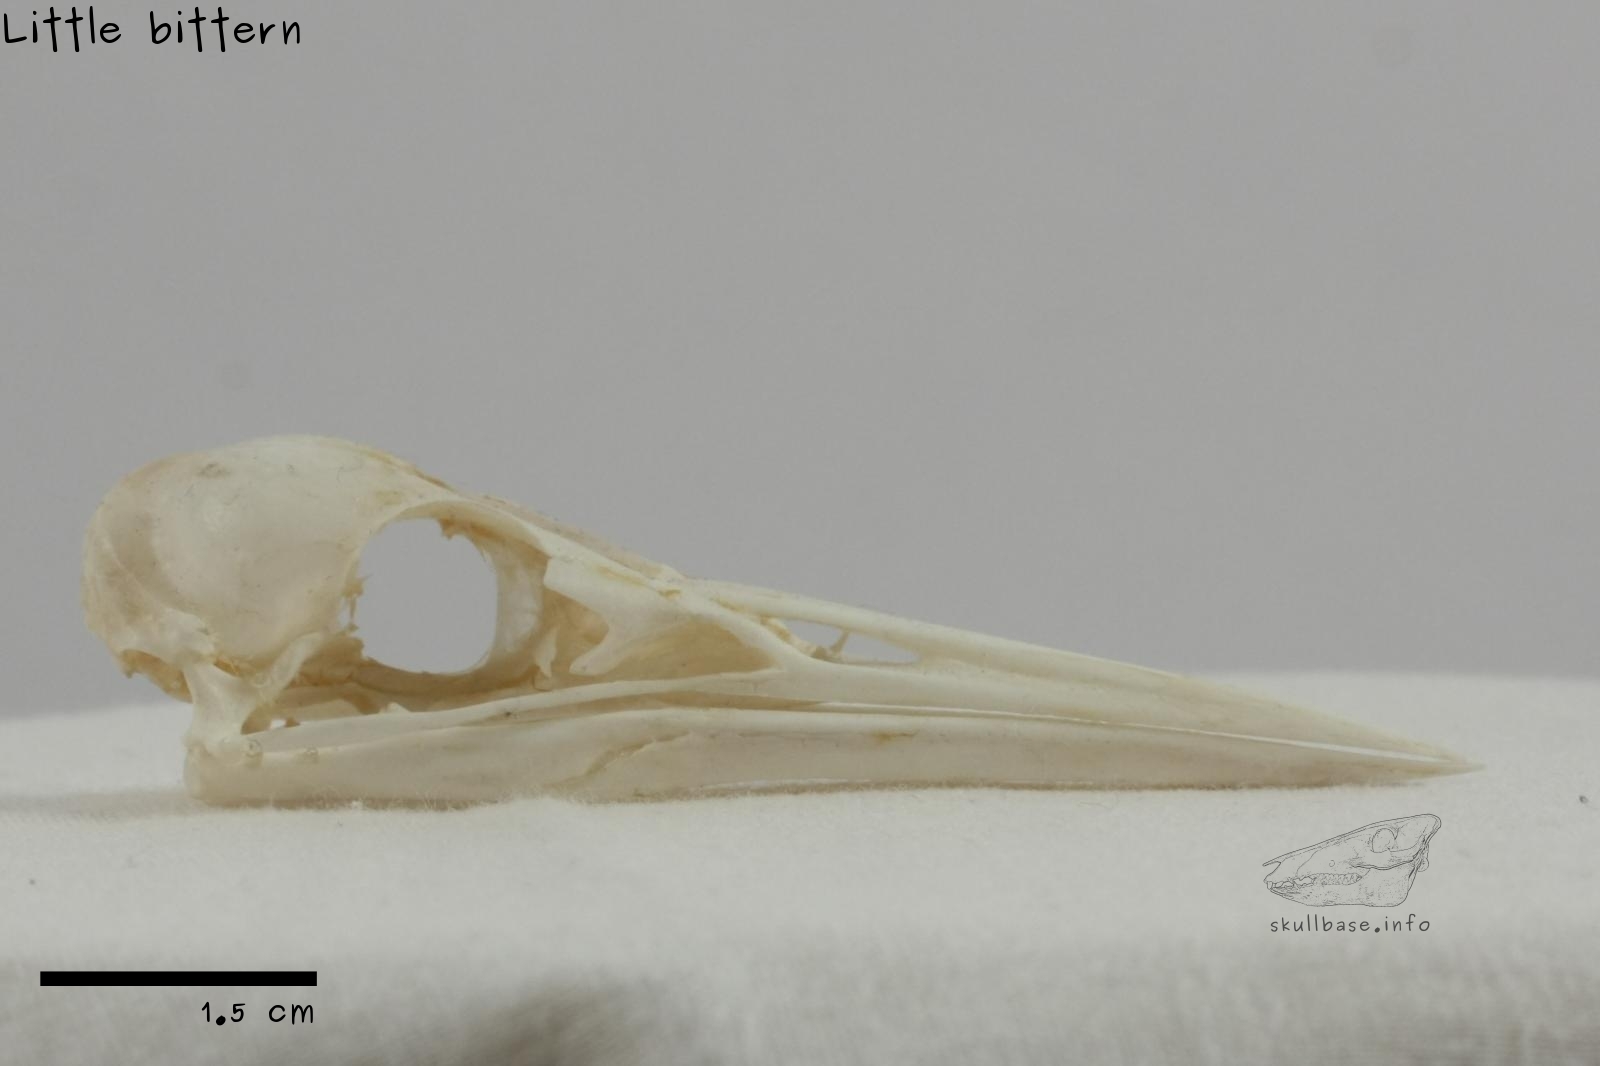 Little bittern (Ixobrychus minutus) skull lateral view